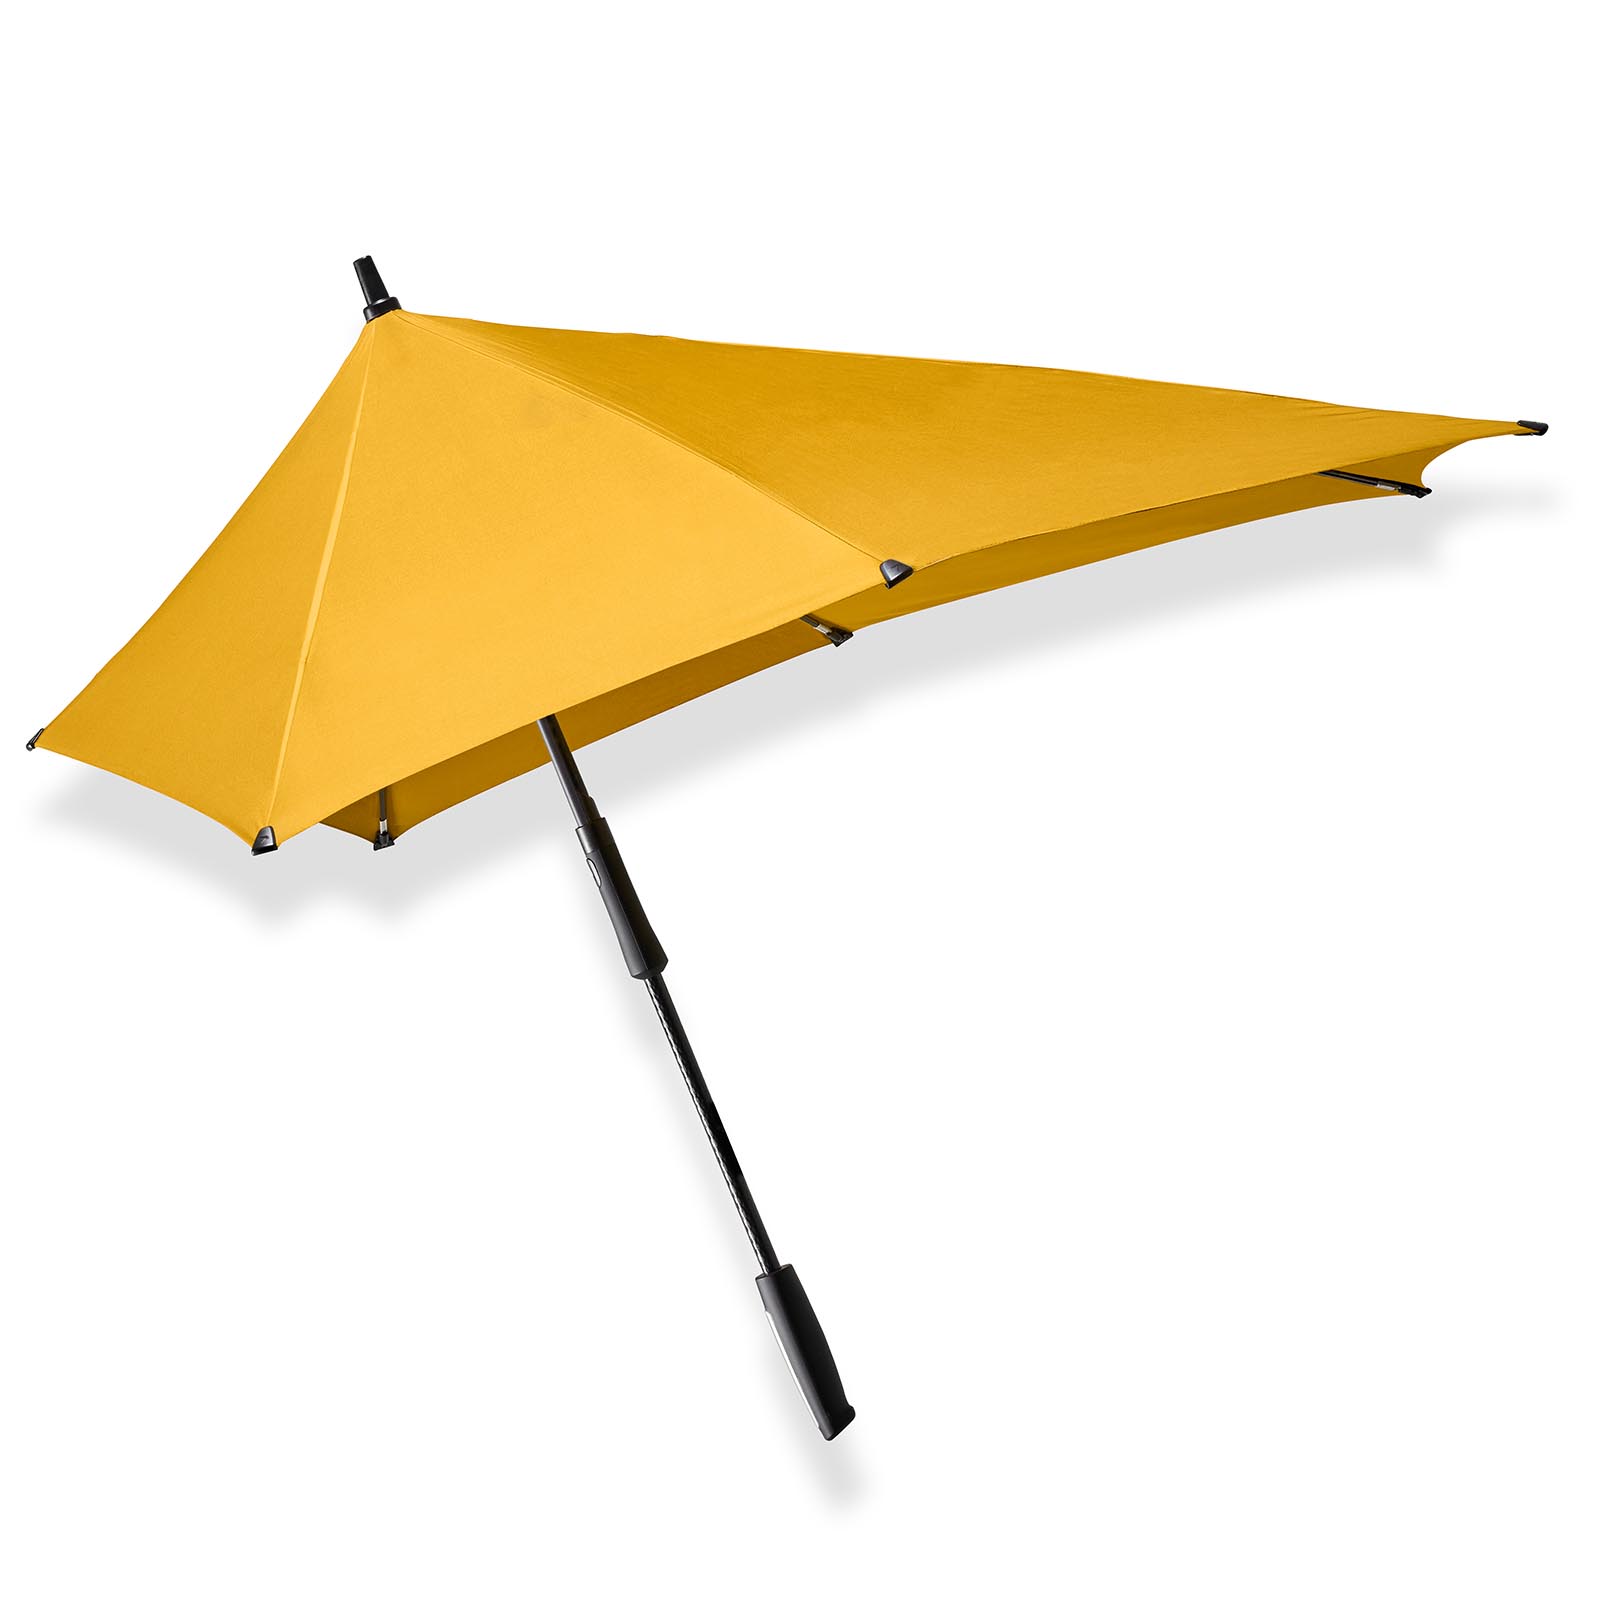 Sovjet Mammoet Natuur Buy a yellow long umbrella XXL? senz° XXL daylily yellow